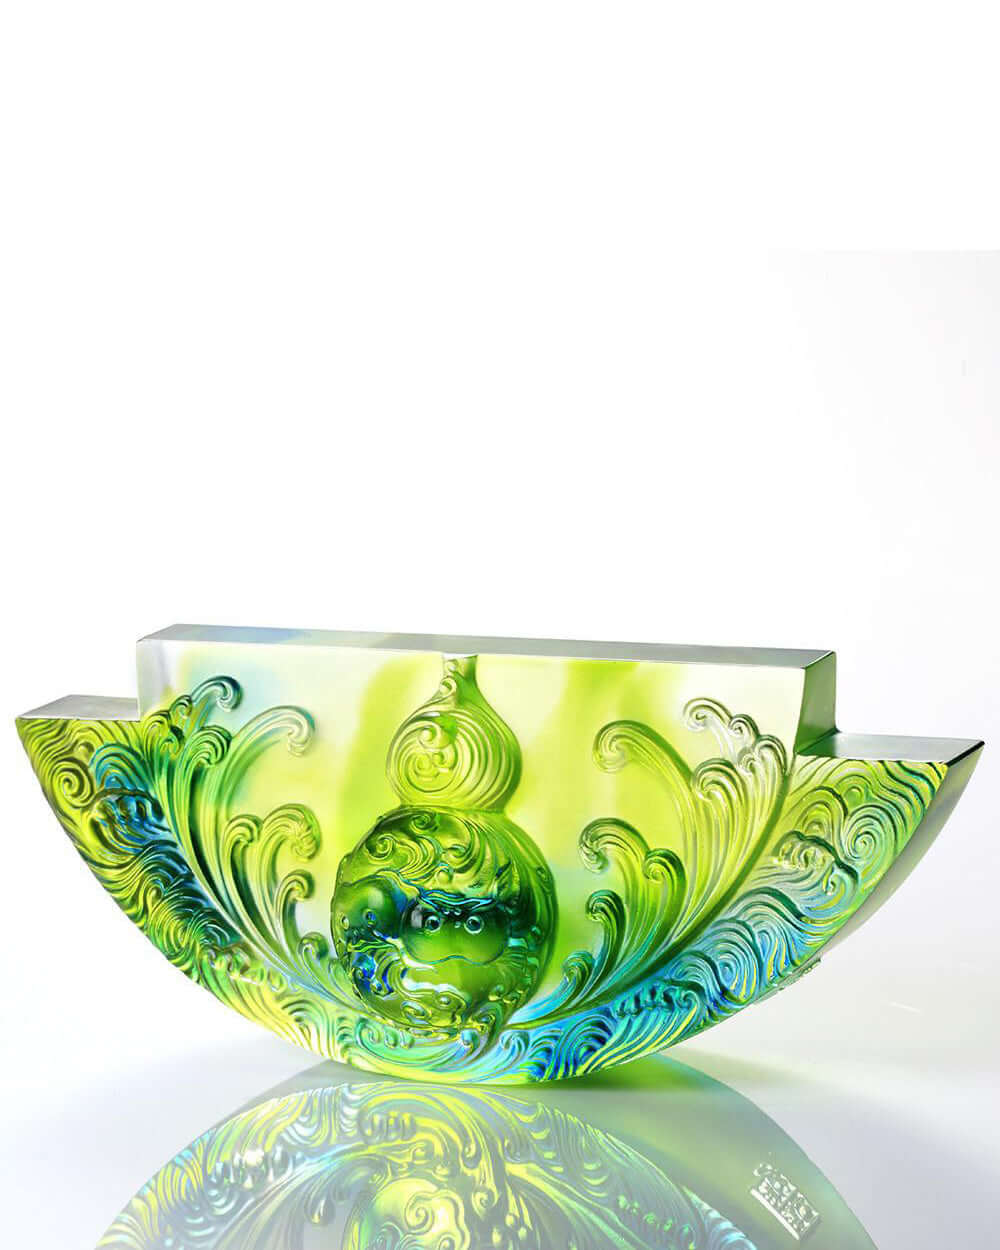 LIULI Crystal Art Crystal Chinese Hulu, The Beauty of Harmony-Harmony Permeates the Land, Bluish/Green Clear